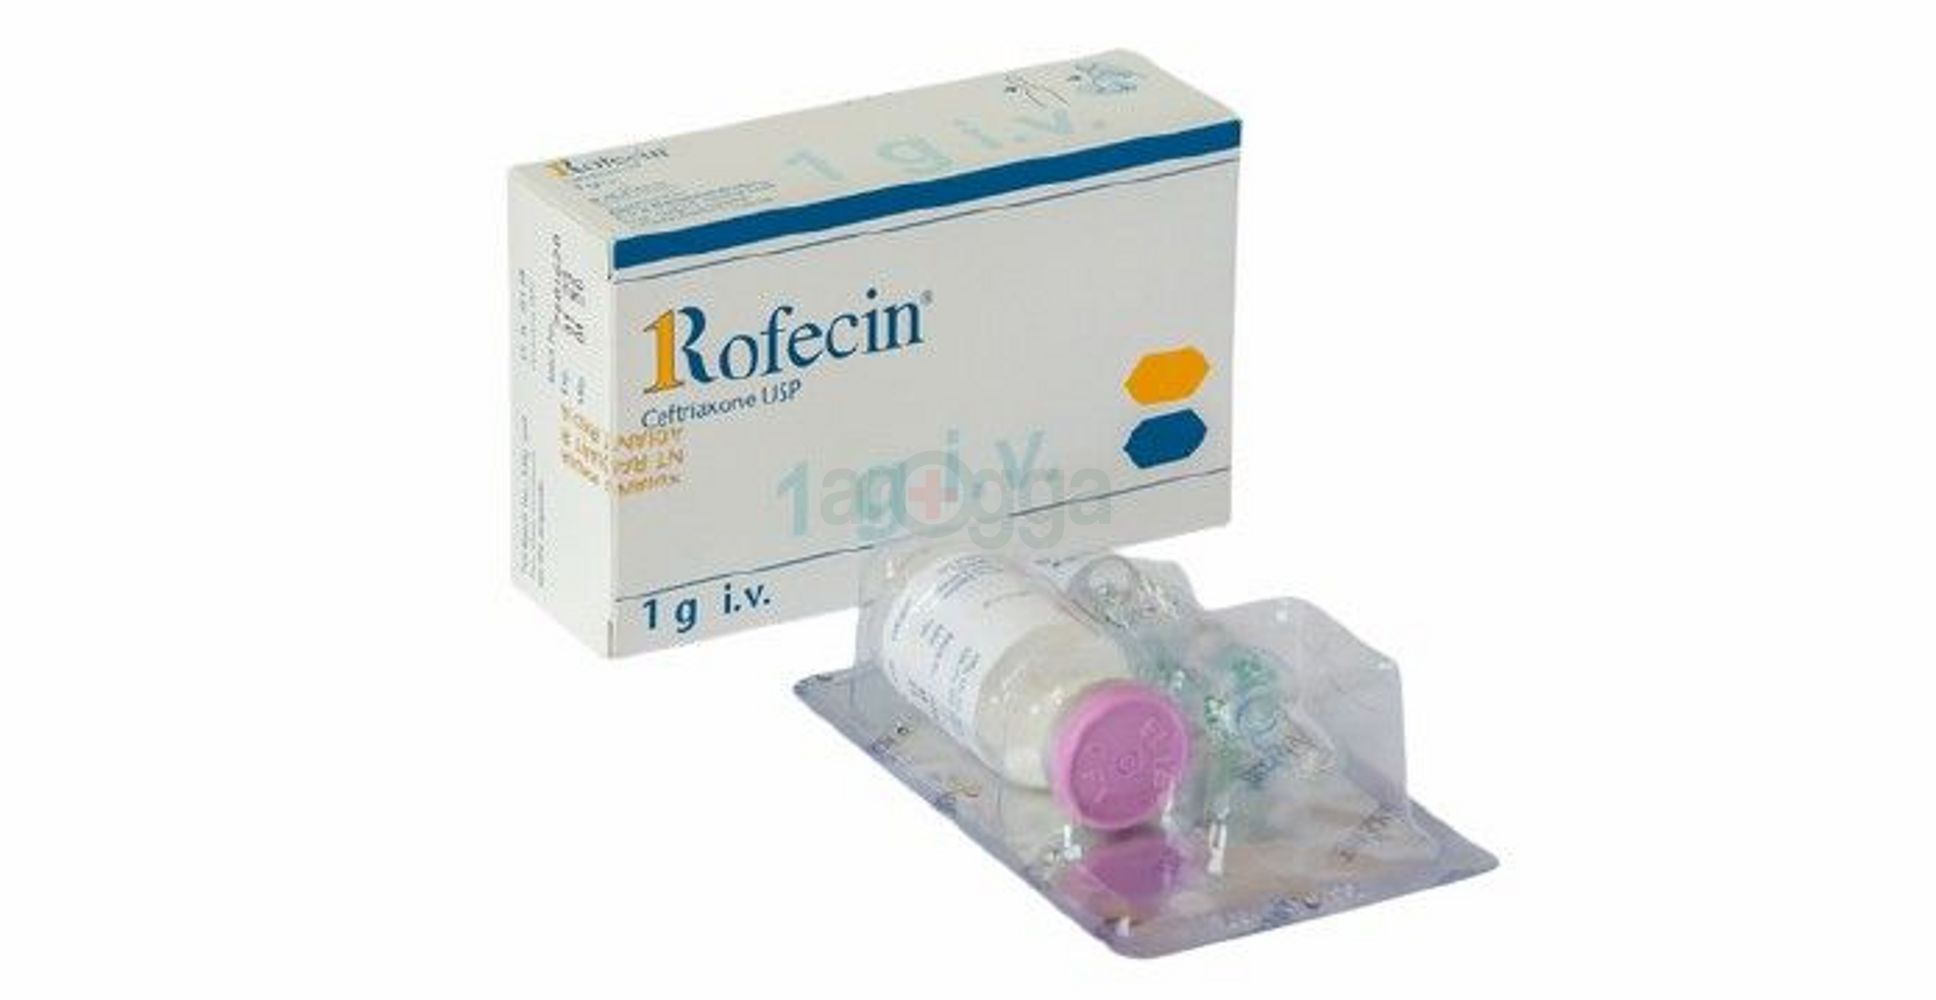 Rofecin 1gm IV